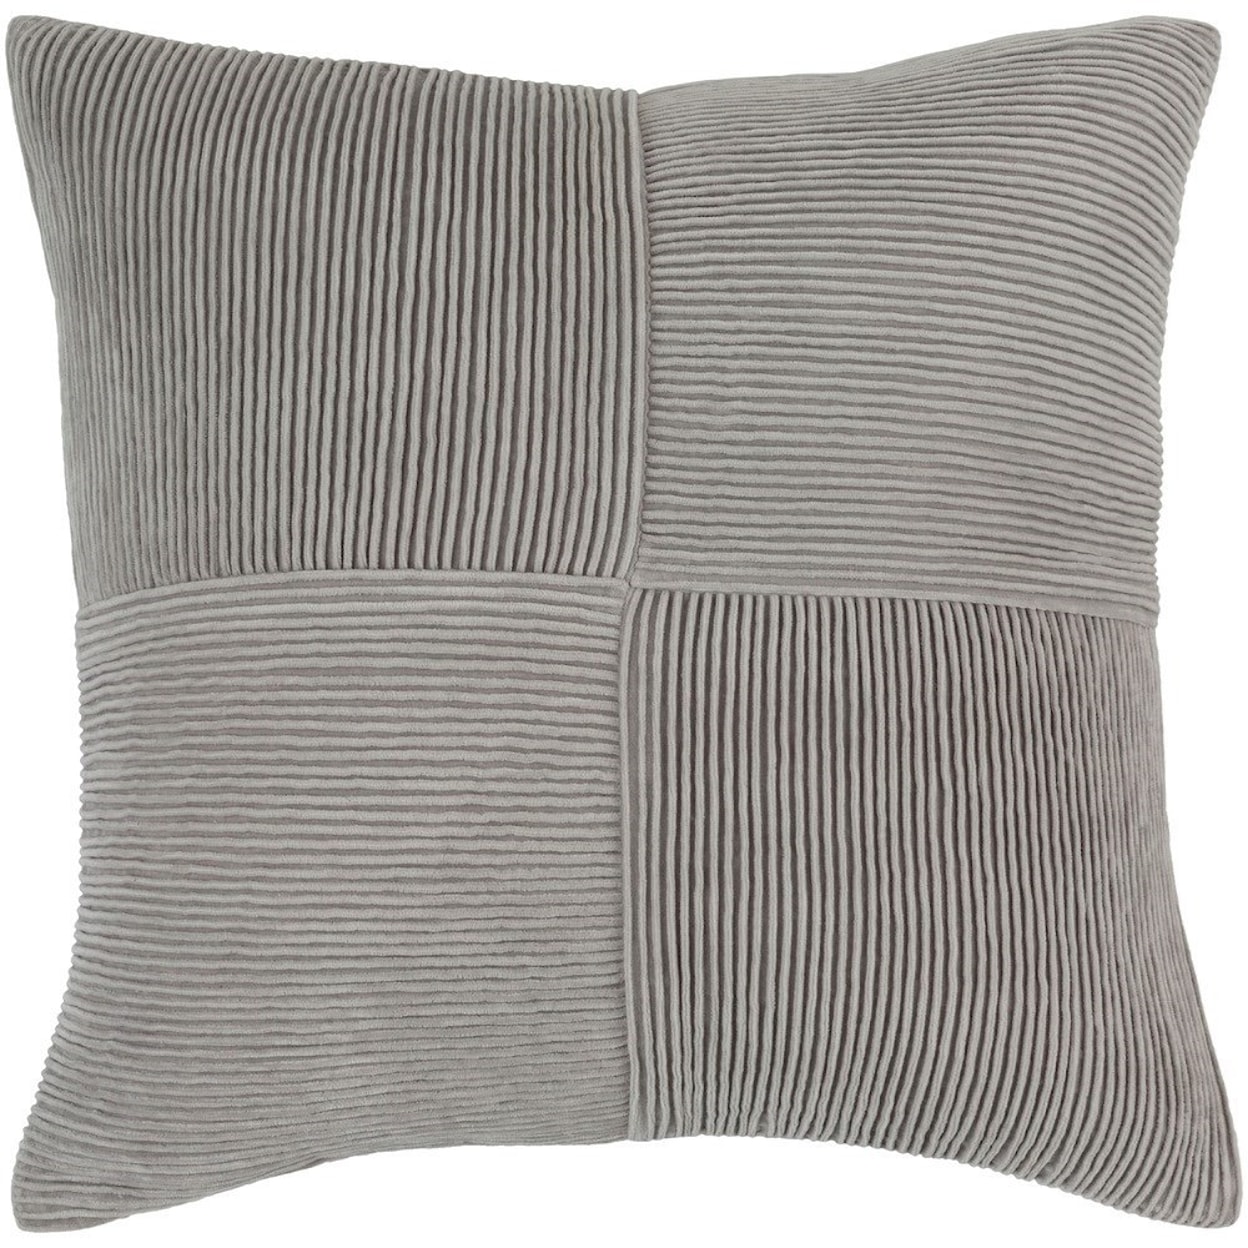 Surya Conrad 18 x 18 x 4 Polyester Throw Pillow